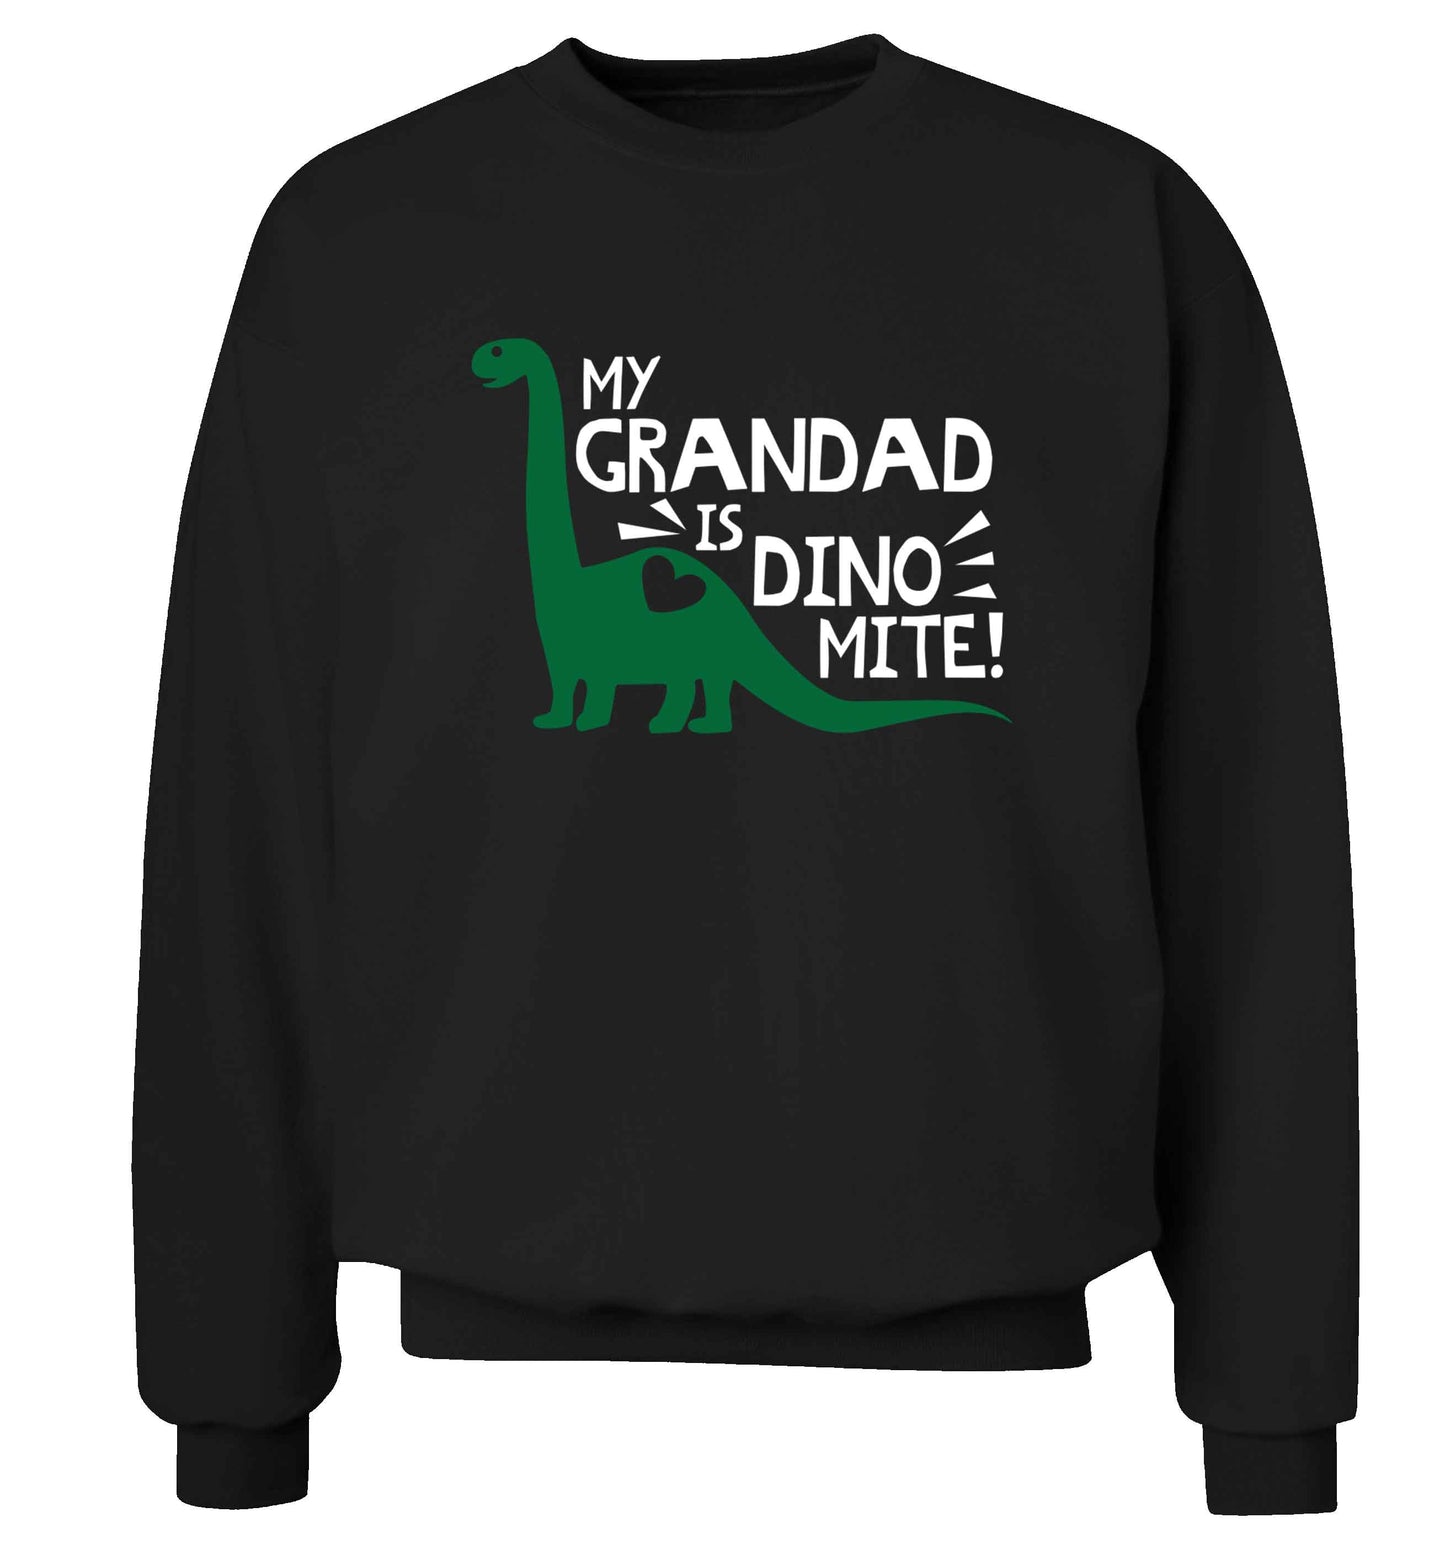 My grandad is dinomite! Adult's unisex black Sweater 2XL